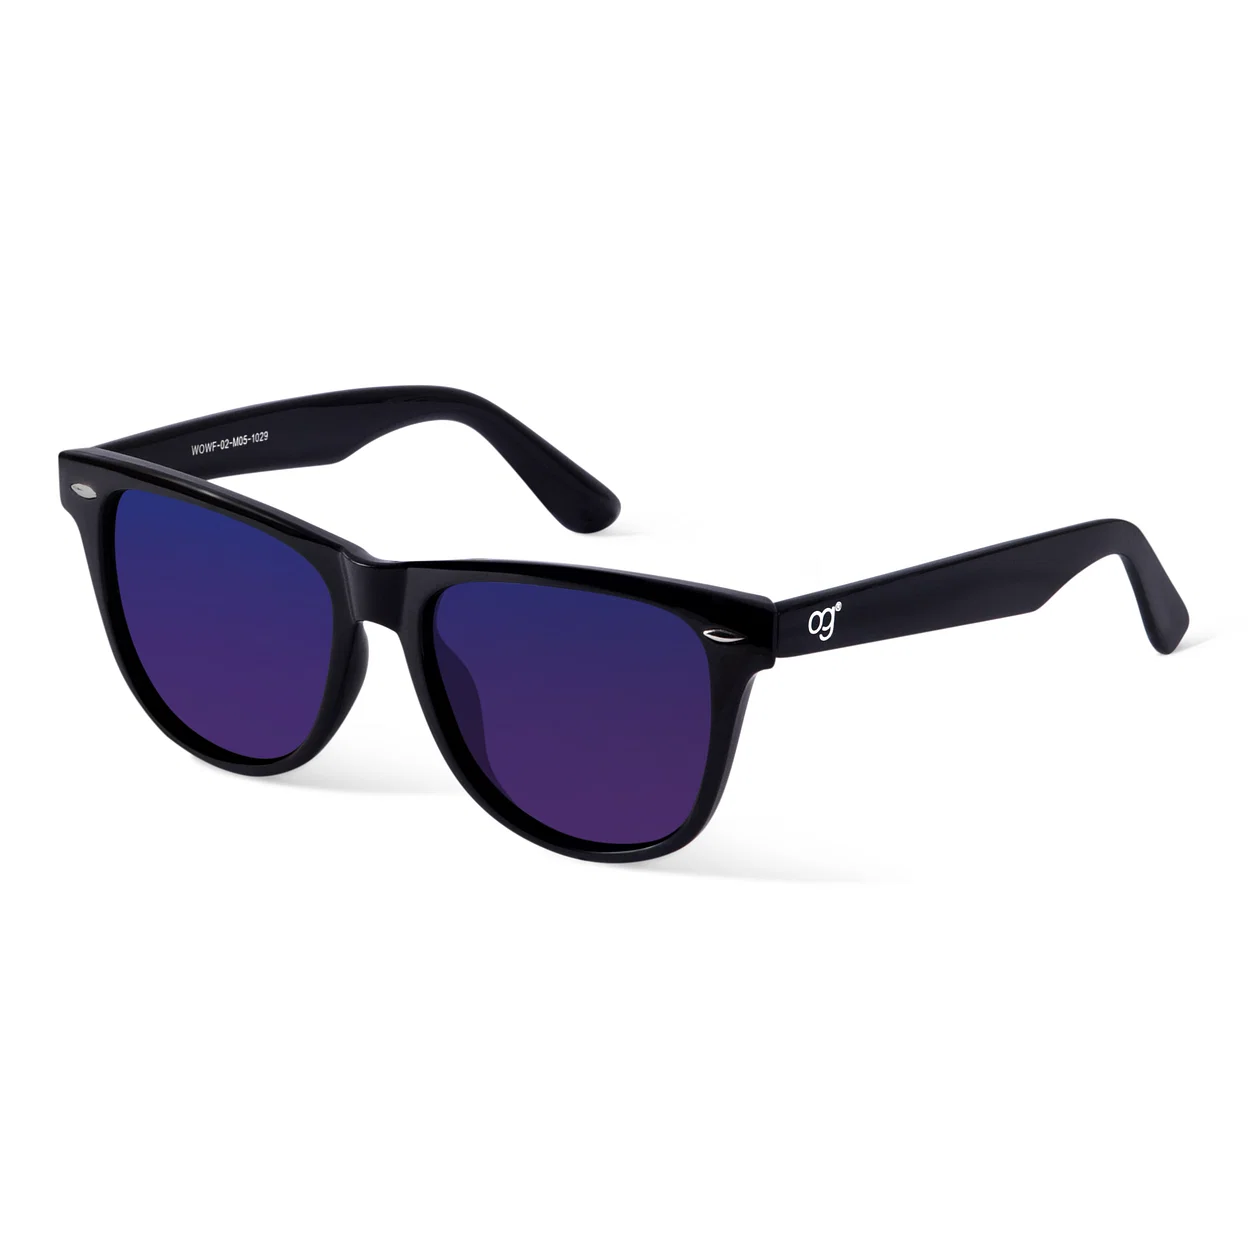 Midnight Polarized Wayfarer Sunglasses by Woggles